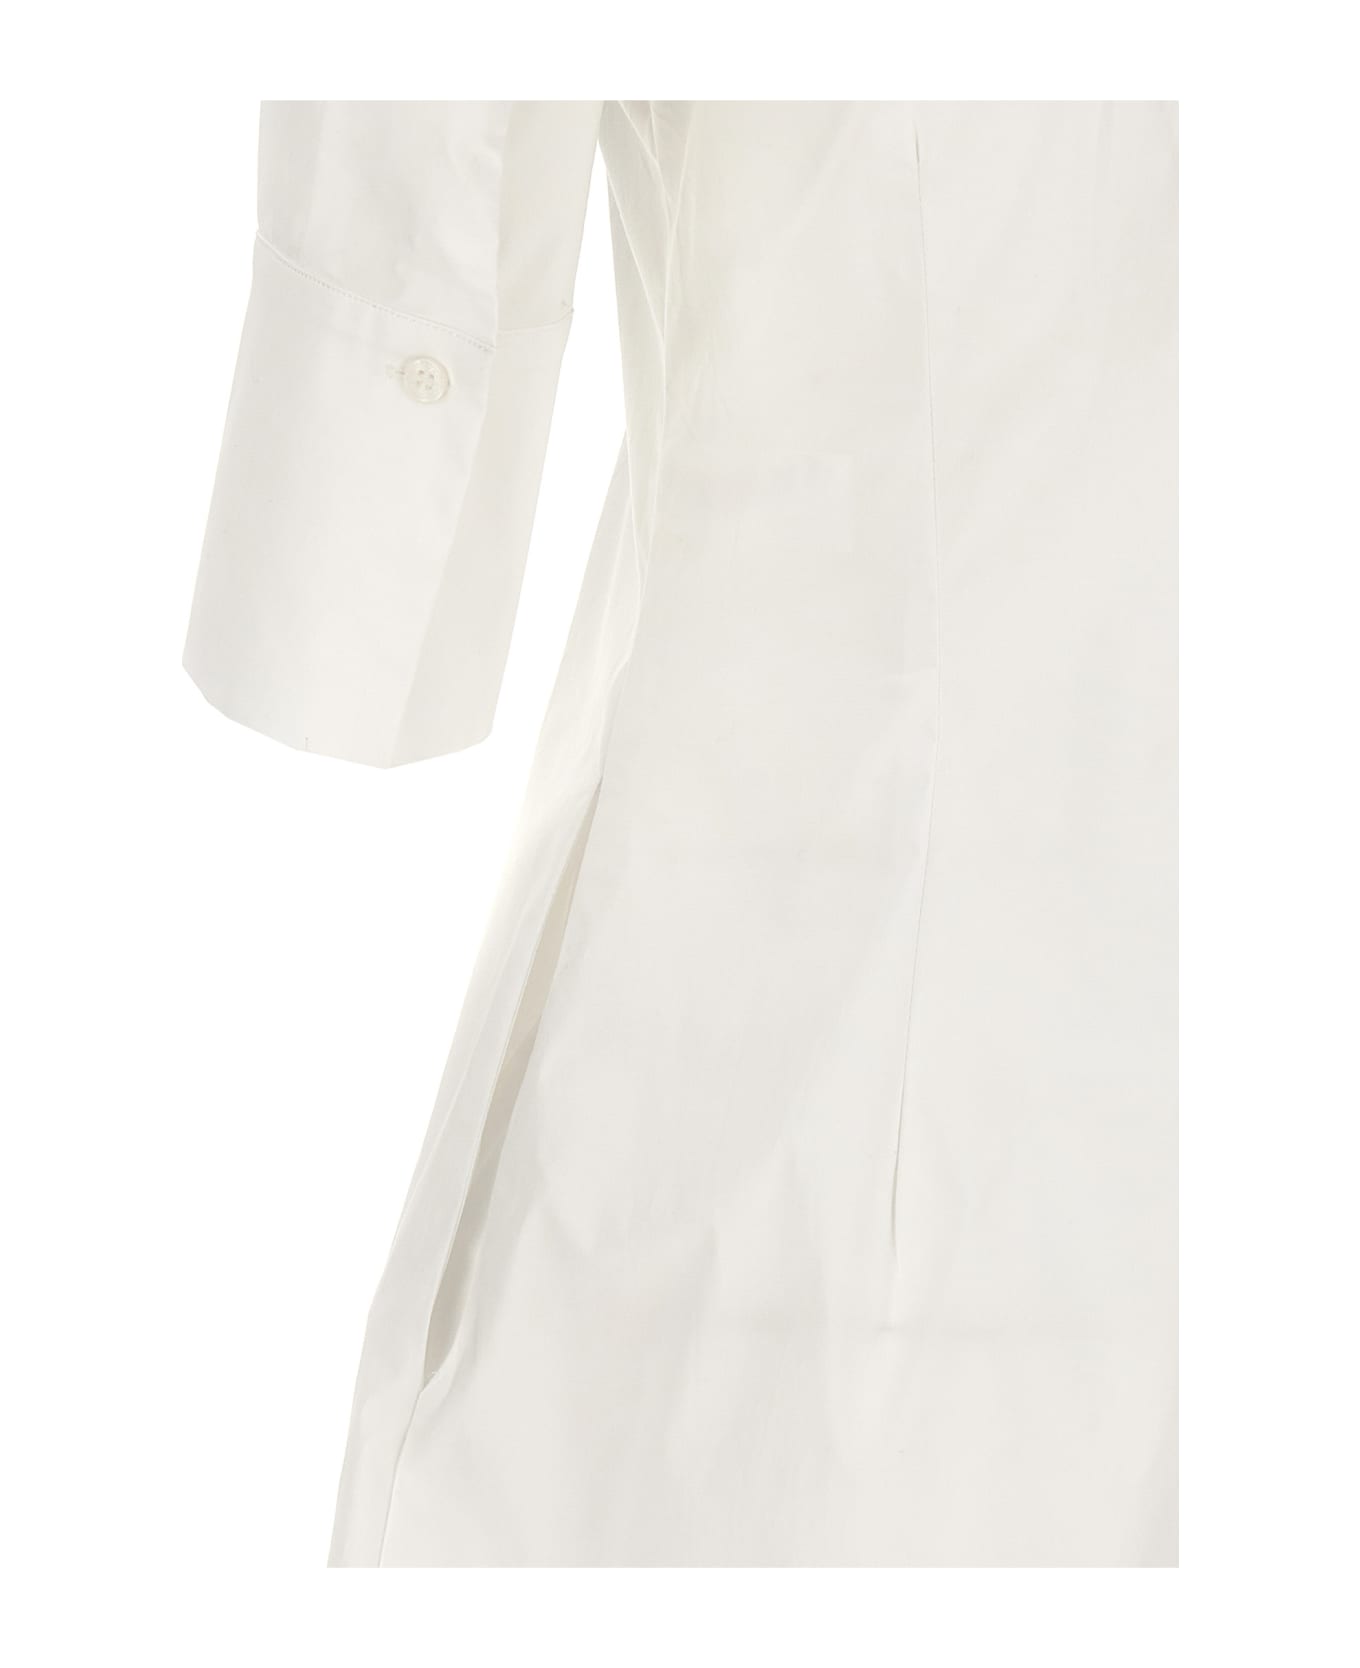 Balossa 'miami' Shirt Dress - White ワンピース＆ドレス